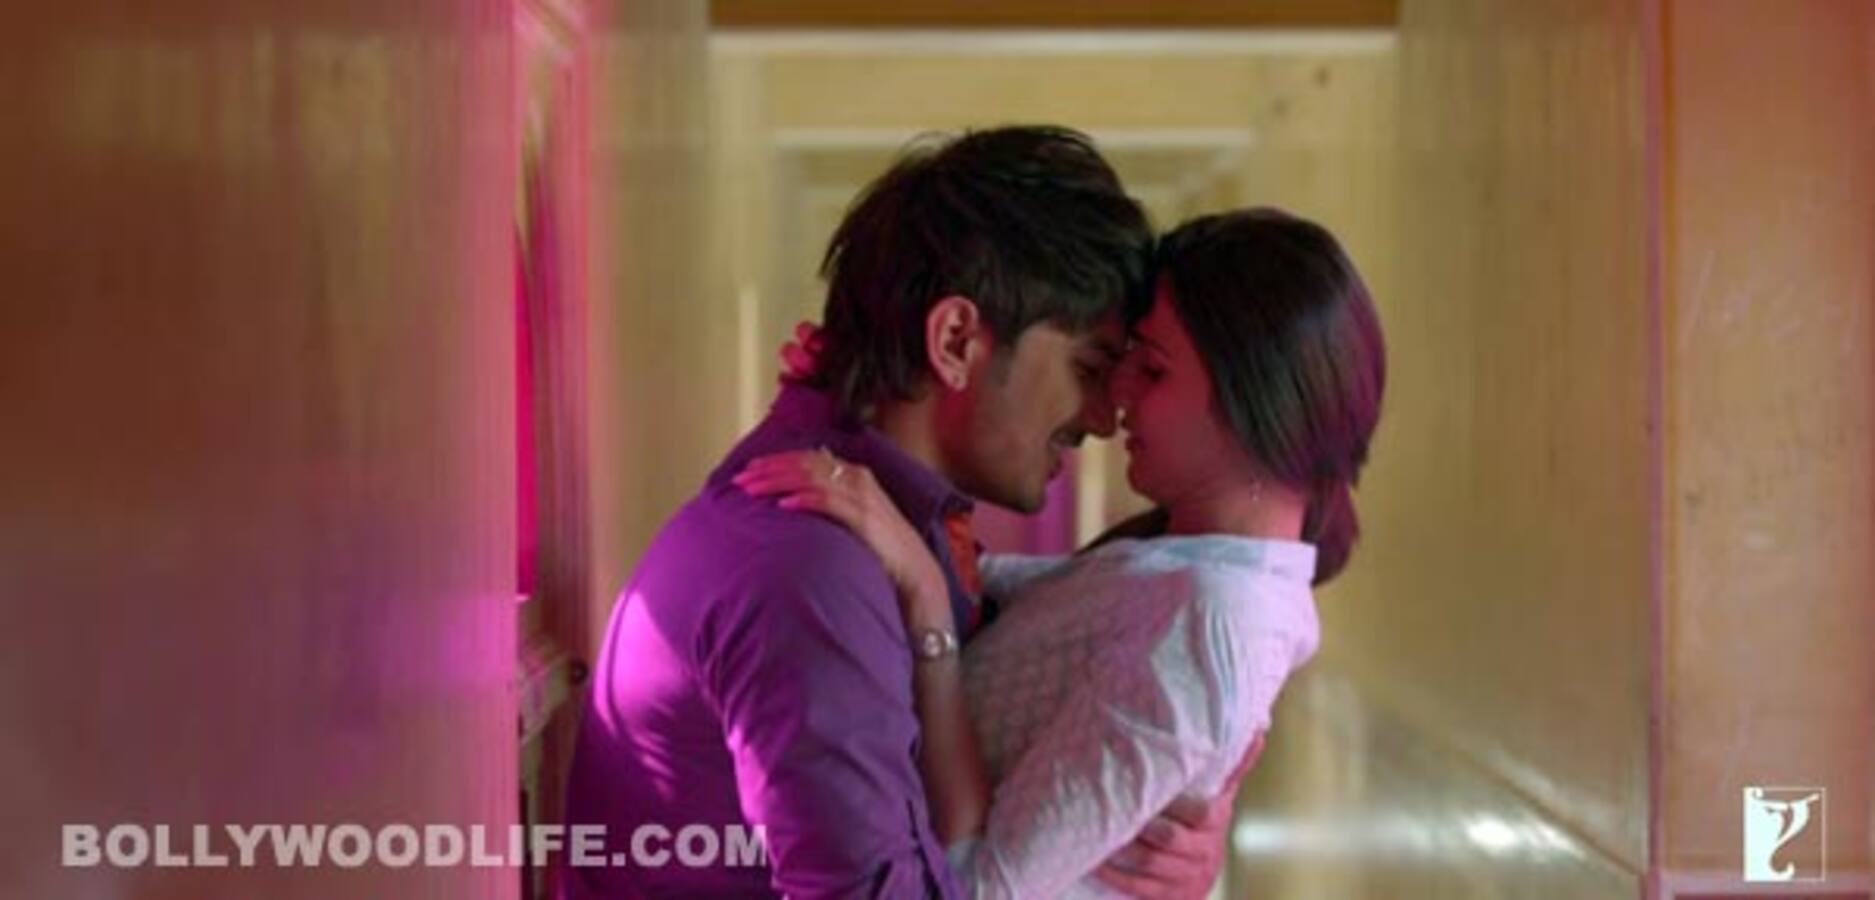 Shuddh Desi Romance Loveline Trailer Is Sushant Singh Rajput Trying To Patao Both Parineeti